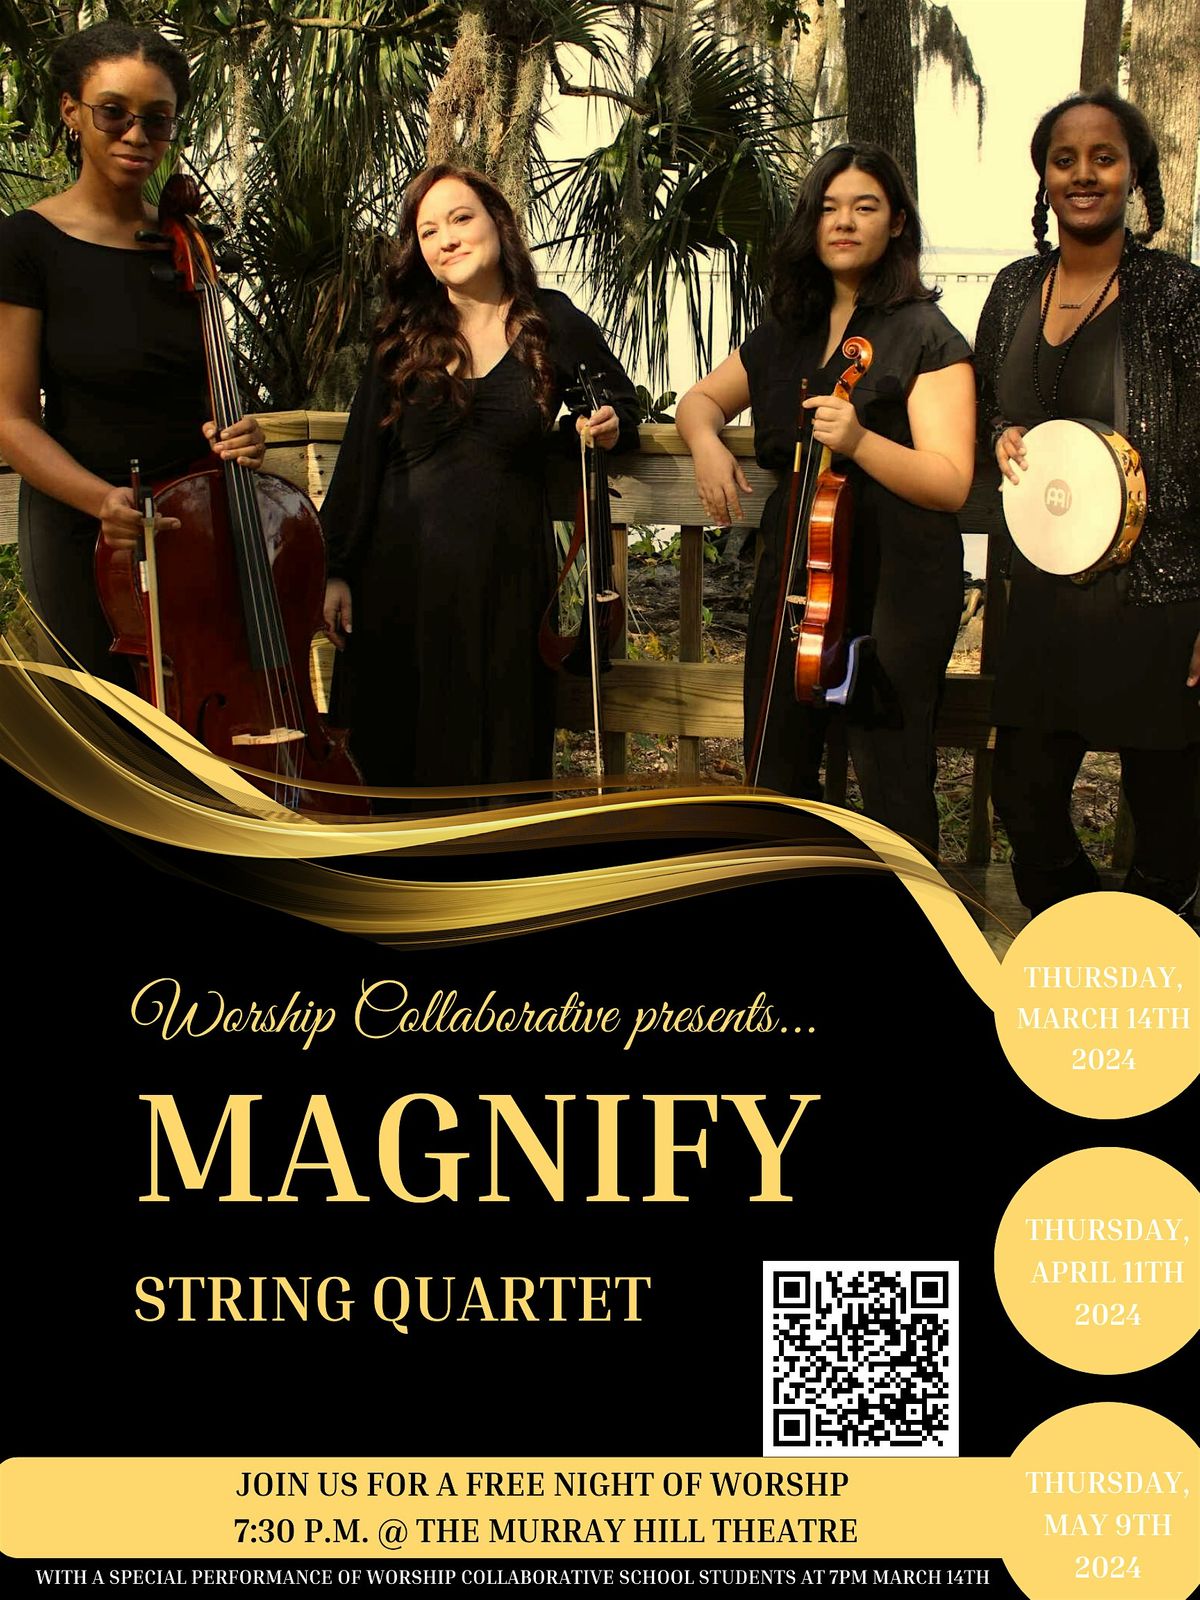 Magnify String Quartet